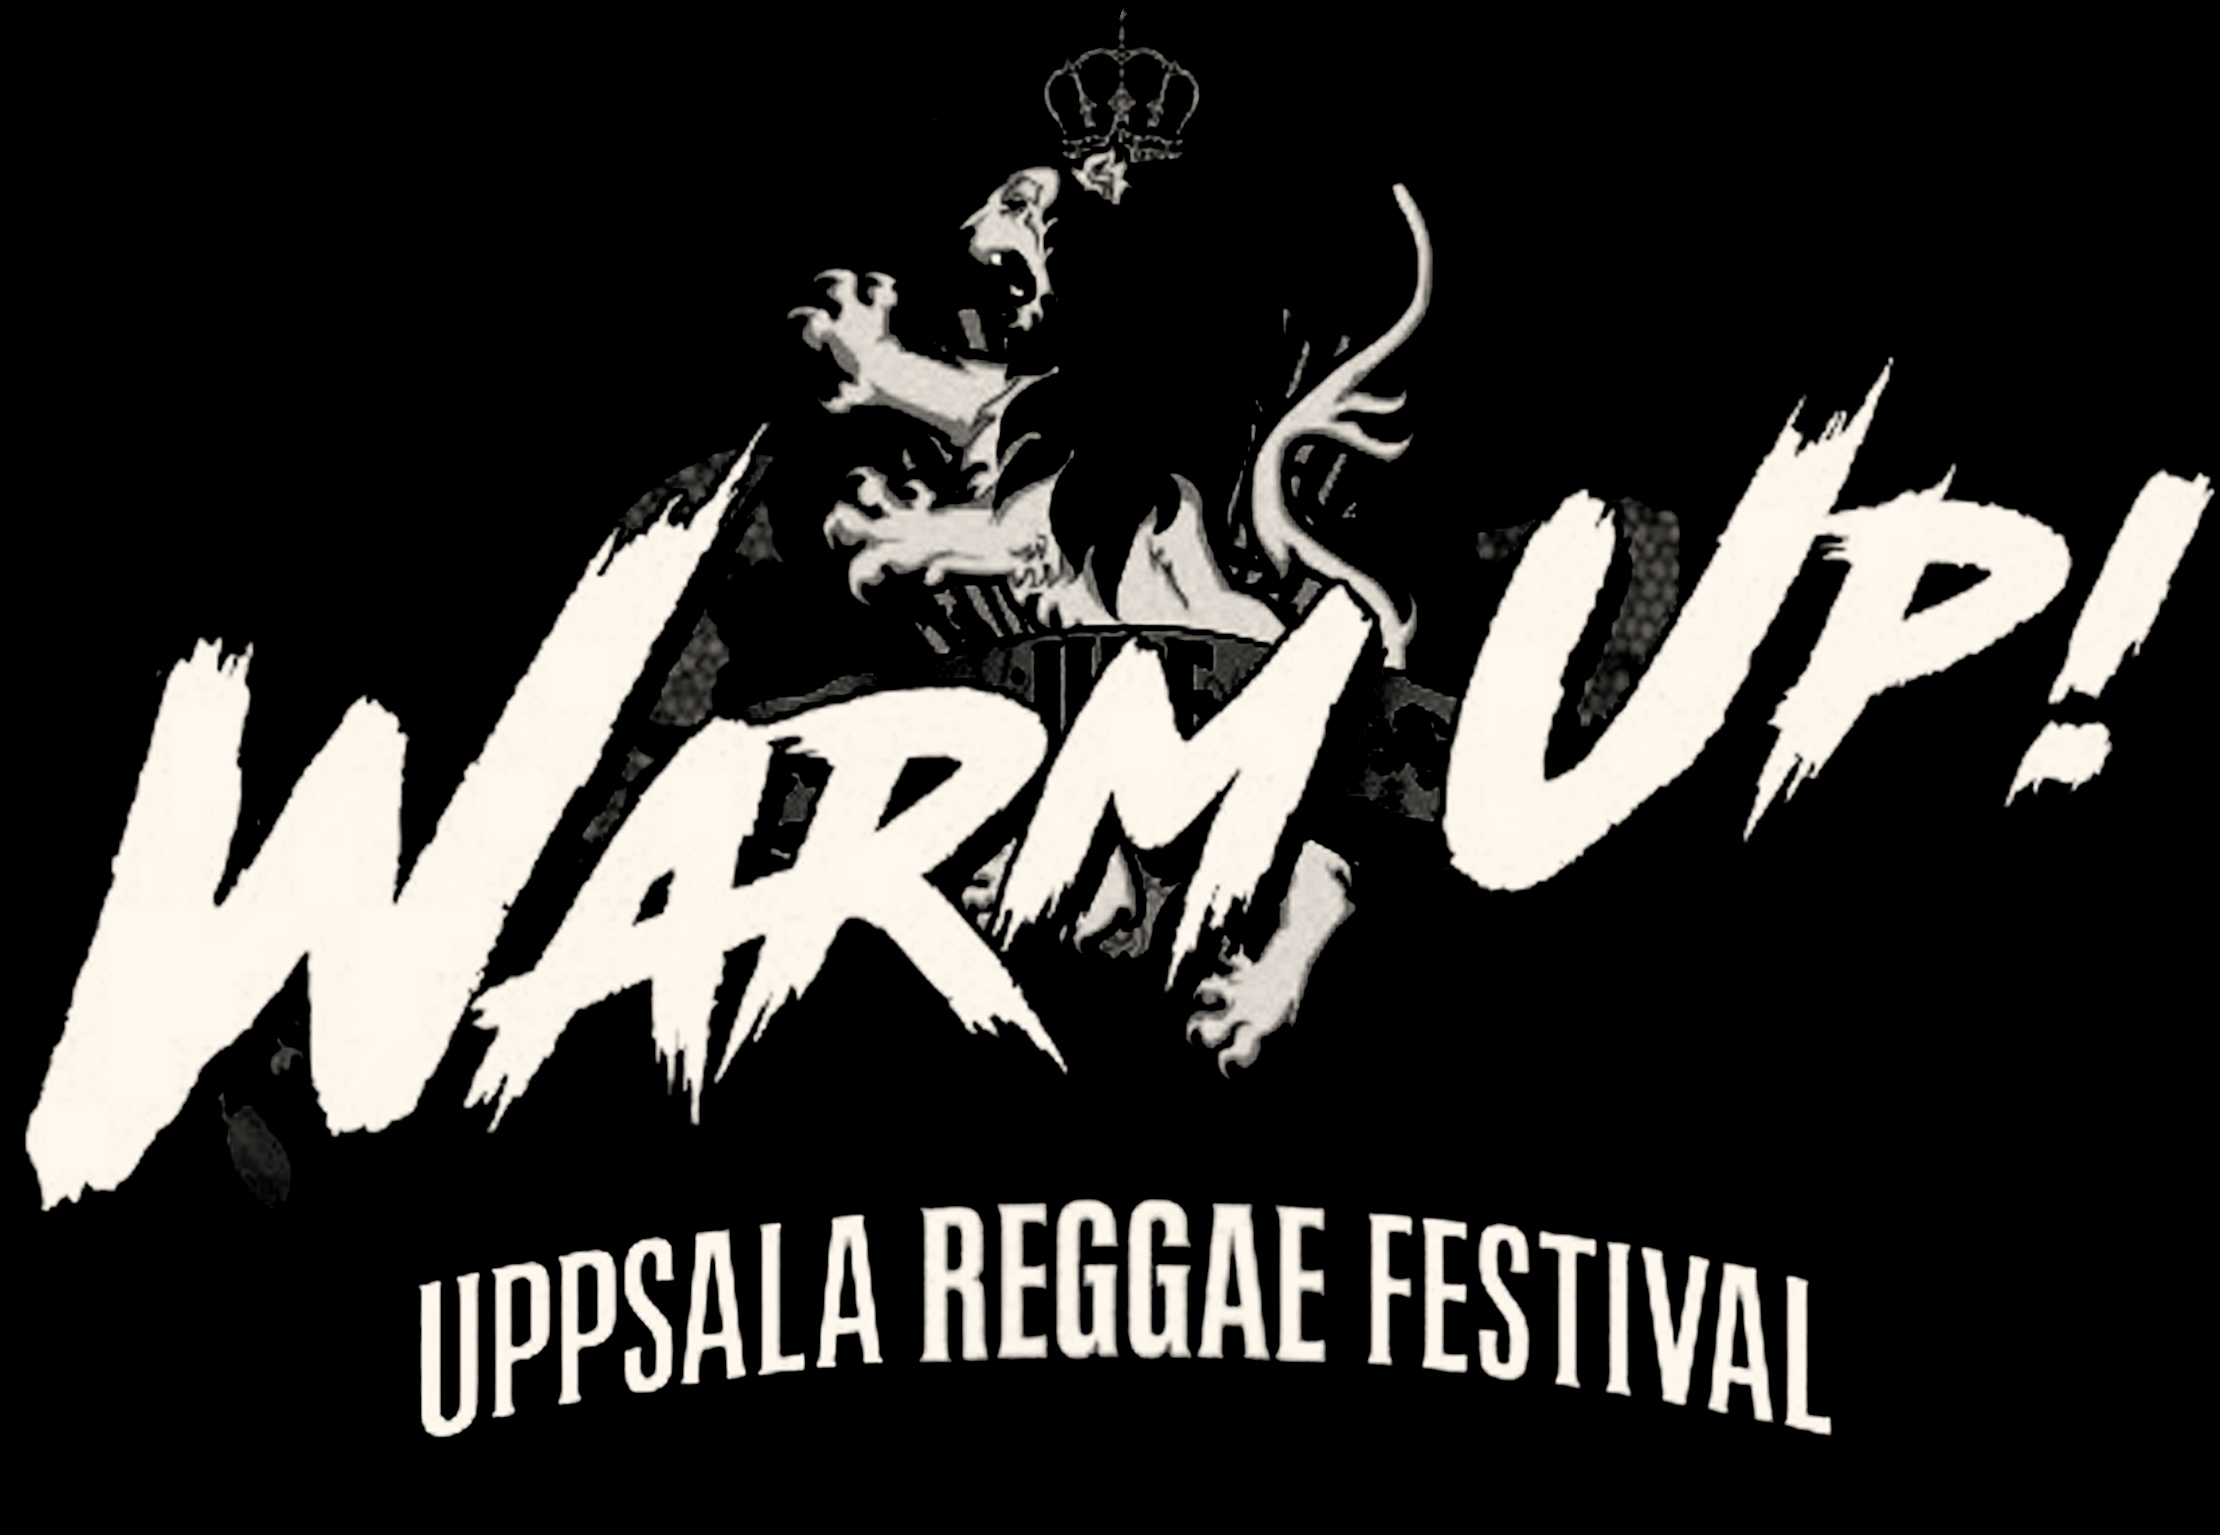 Uppsala Reggae Festival Warm Up!